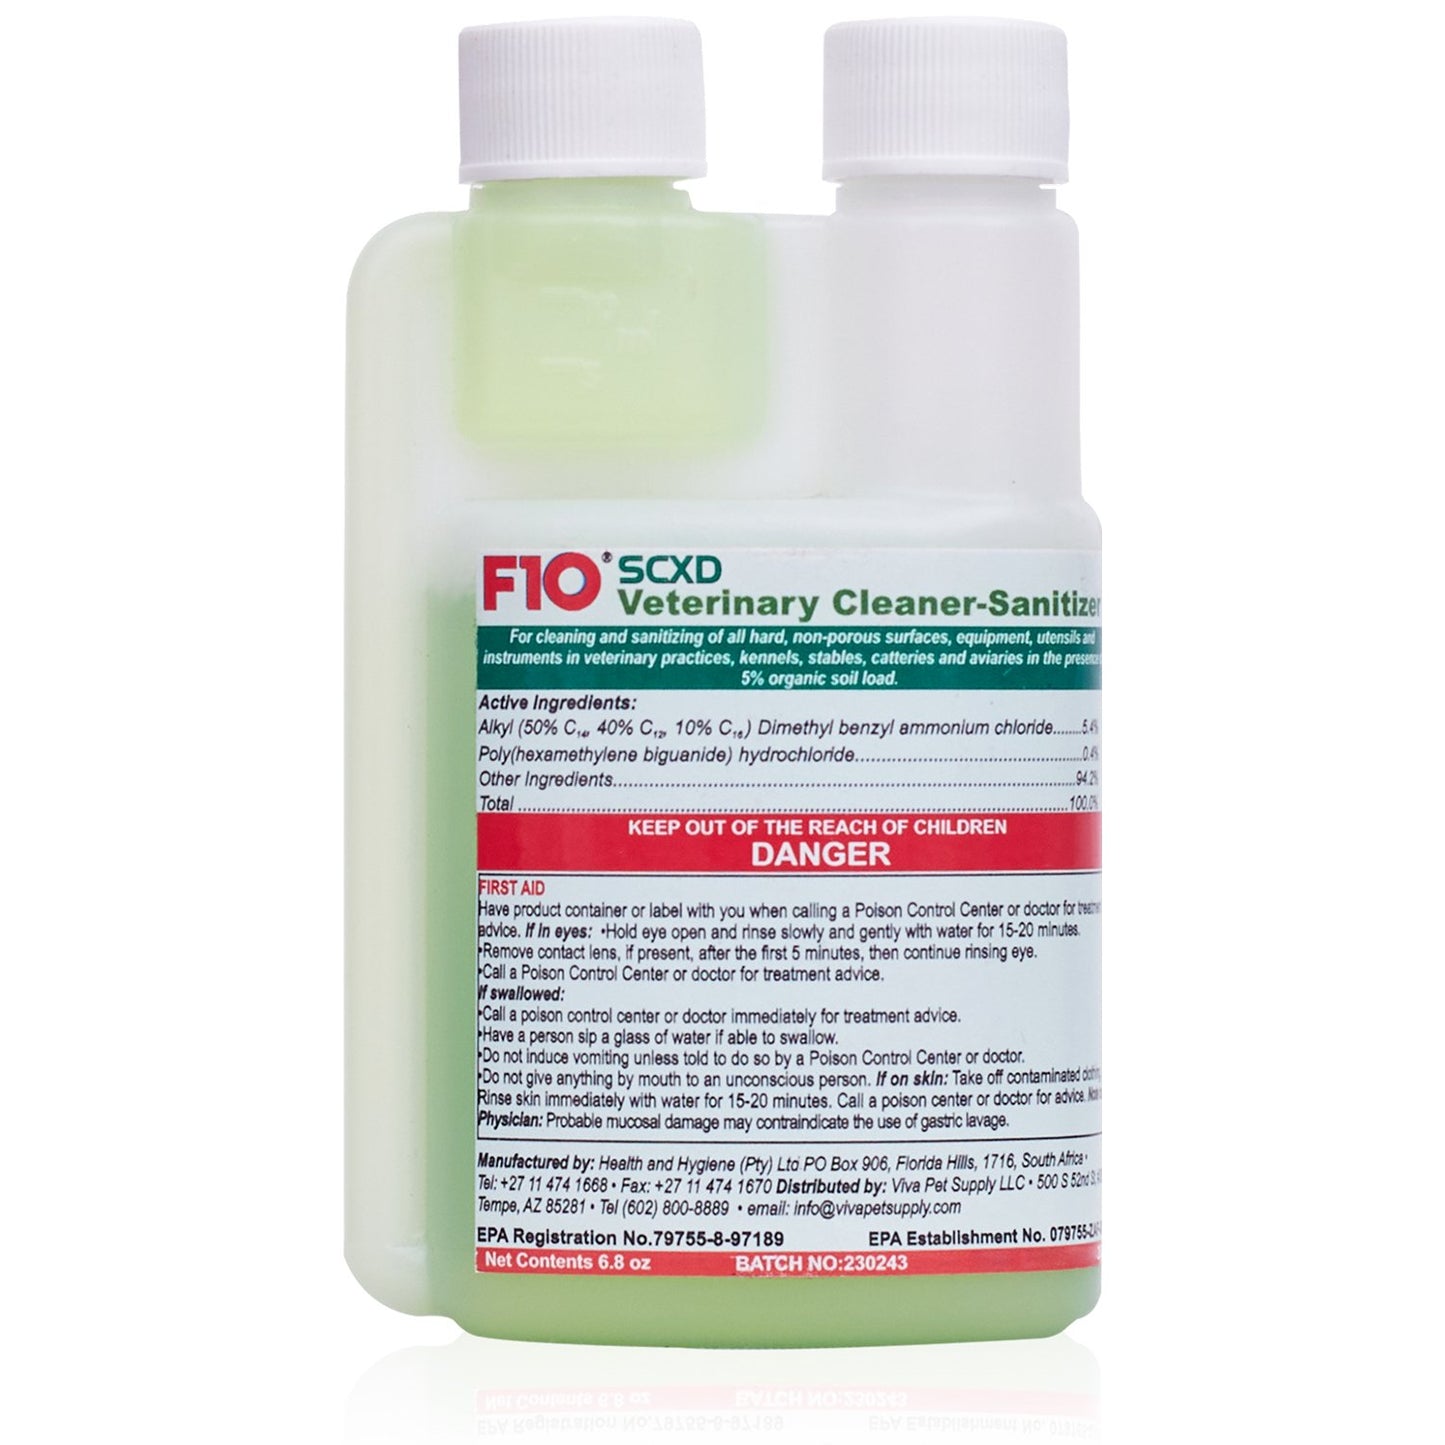 F10SCXD Veterinary Cleaner 200 ml, F10